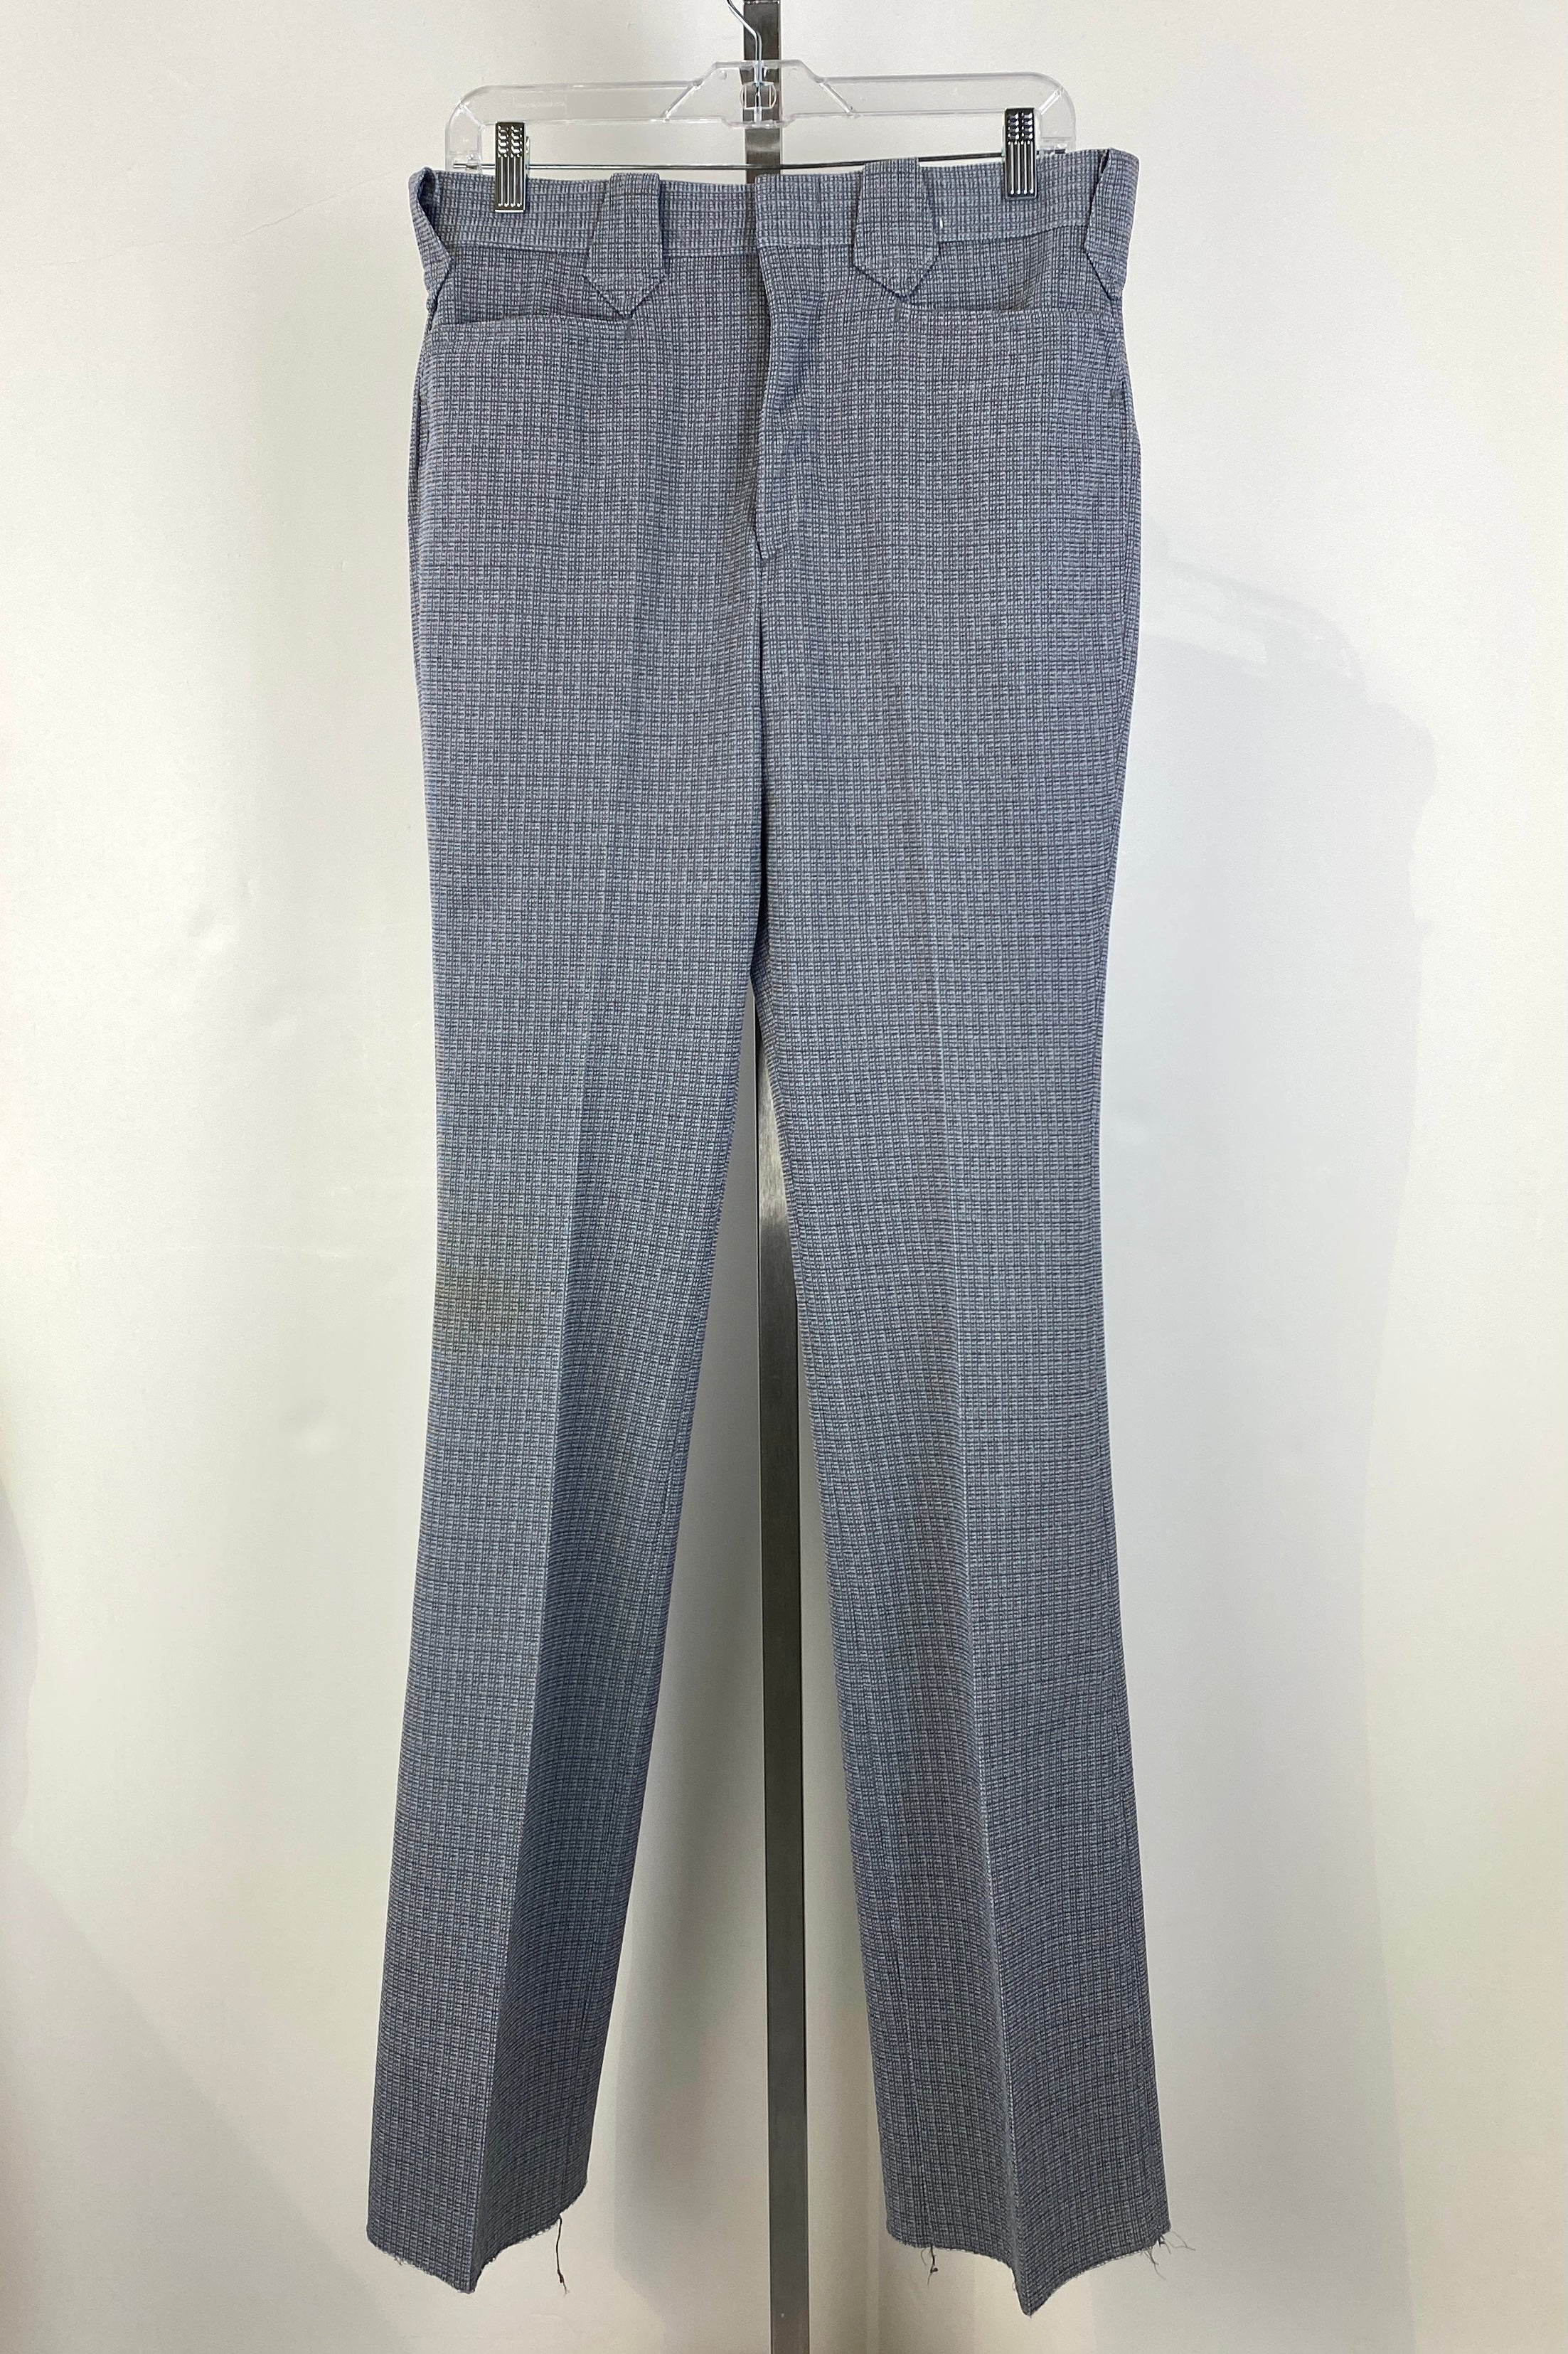 Vintage 1970s Deadstock Polyester Trousers, Men's Grey Lee ...